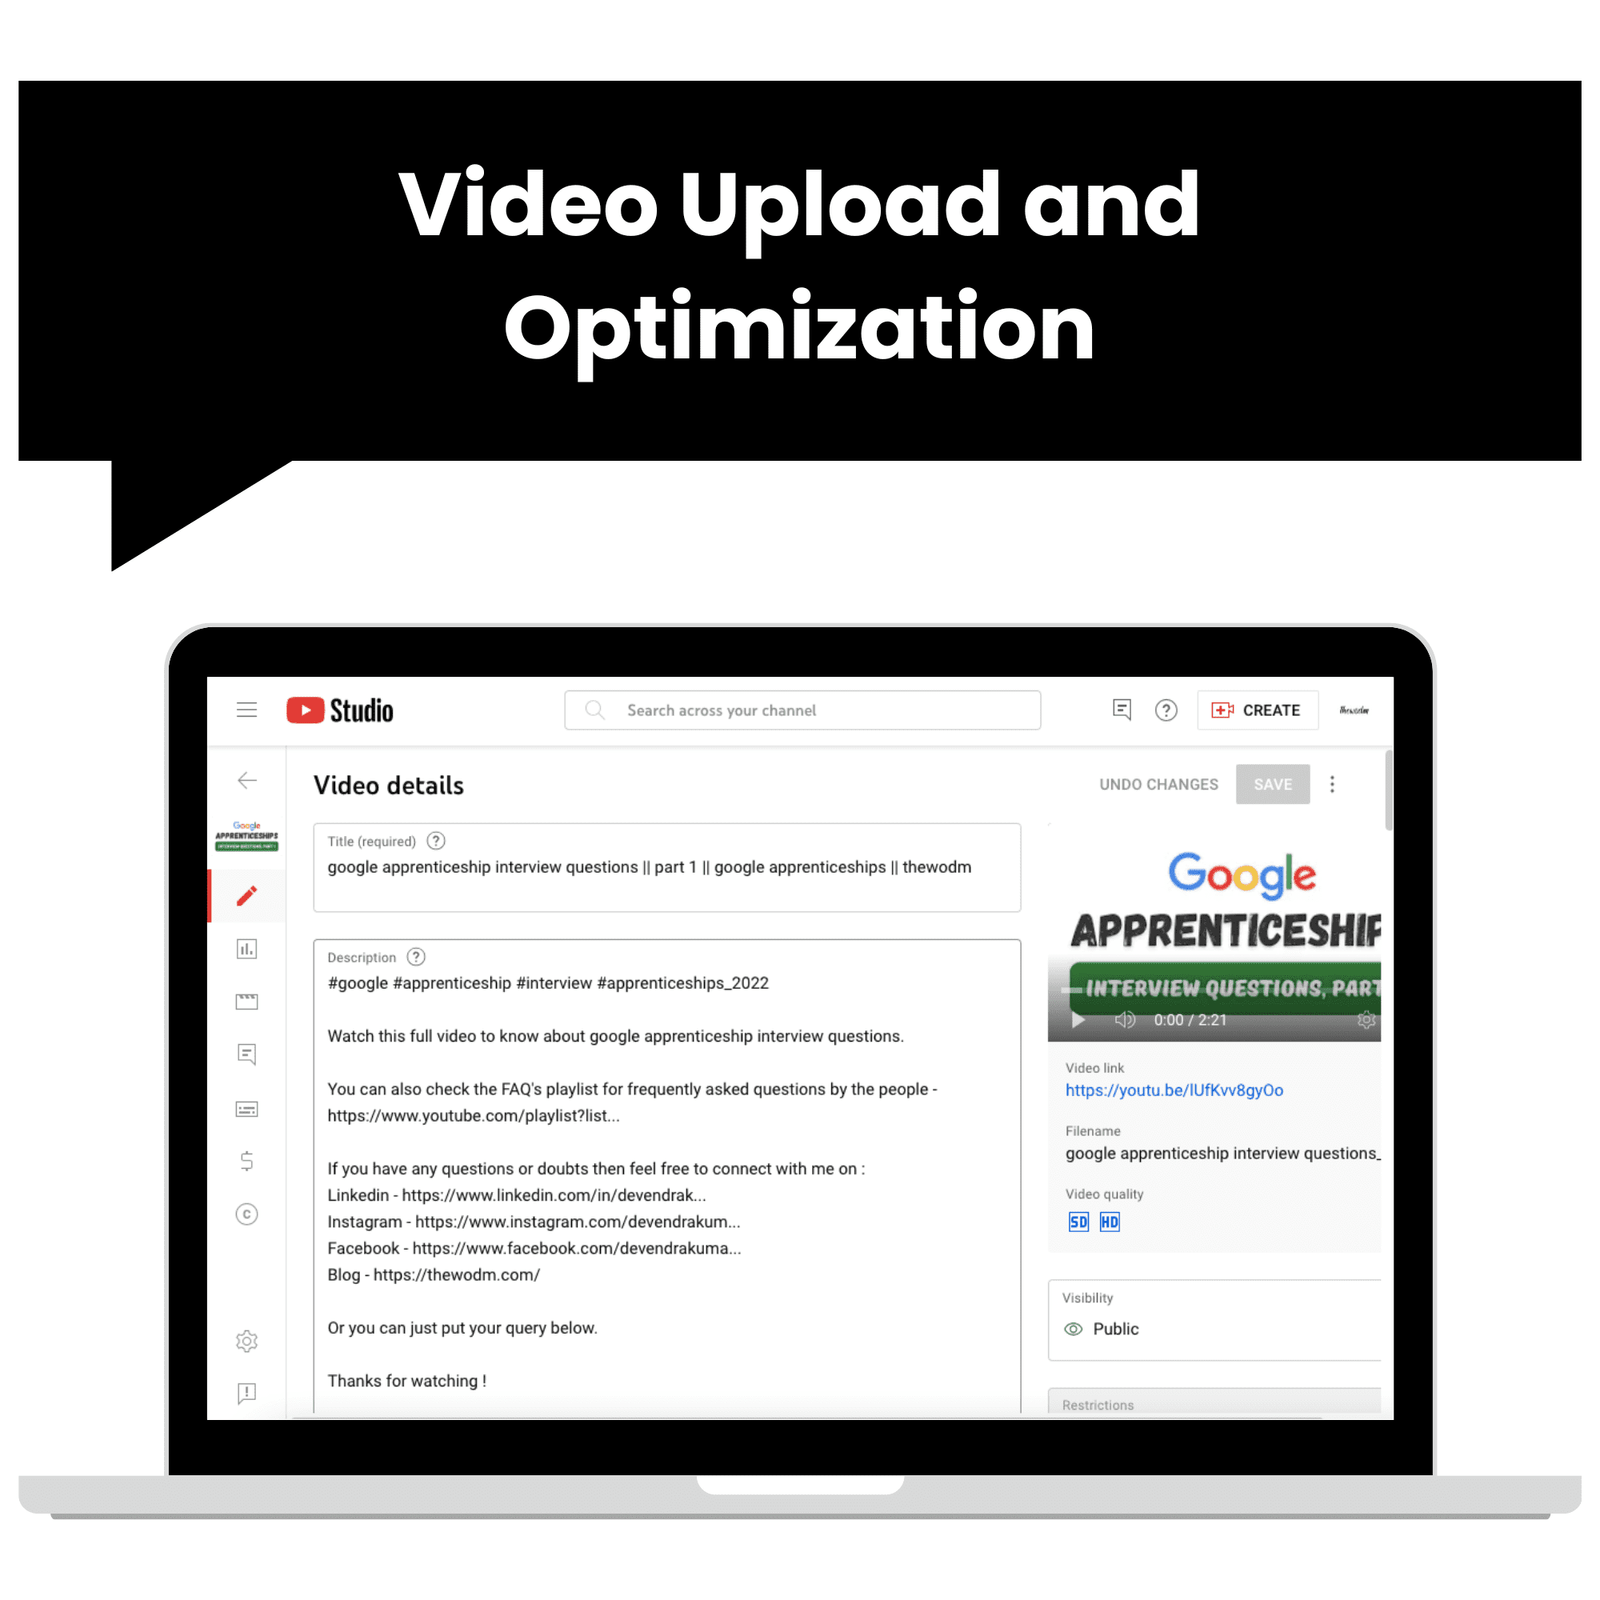 Video Upload and Optimization